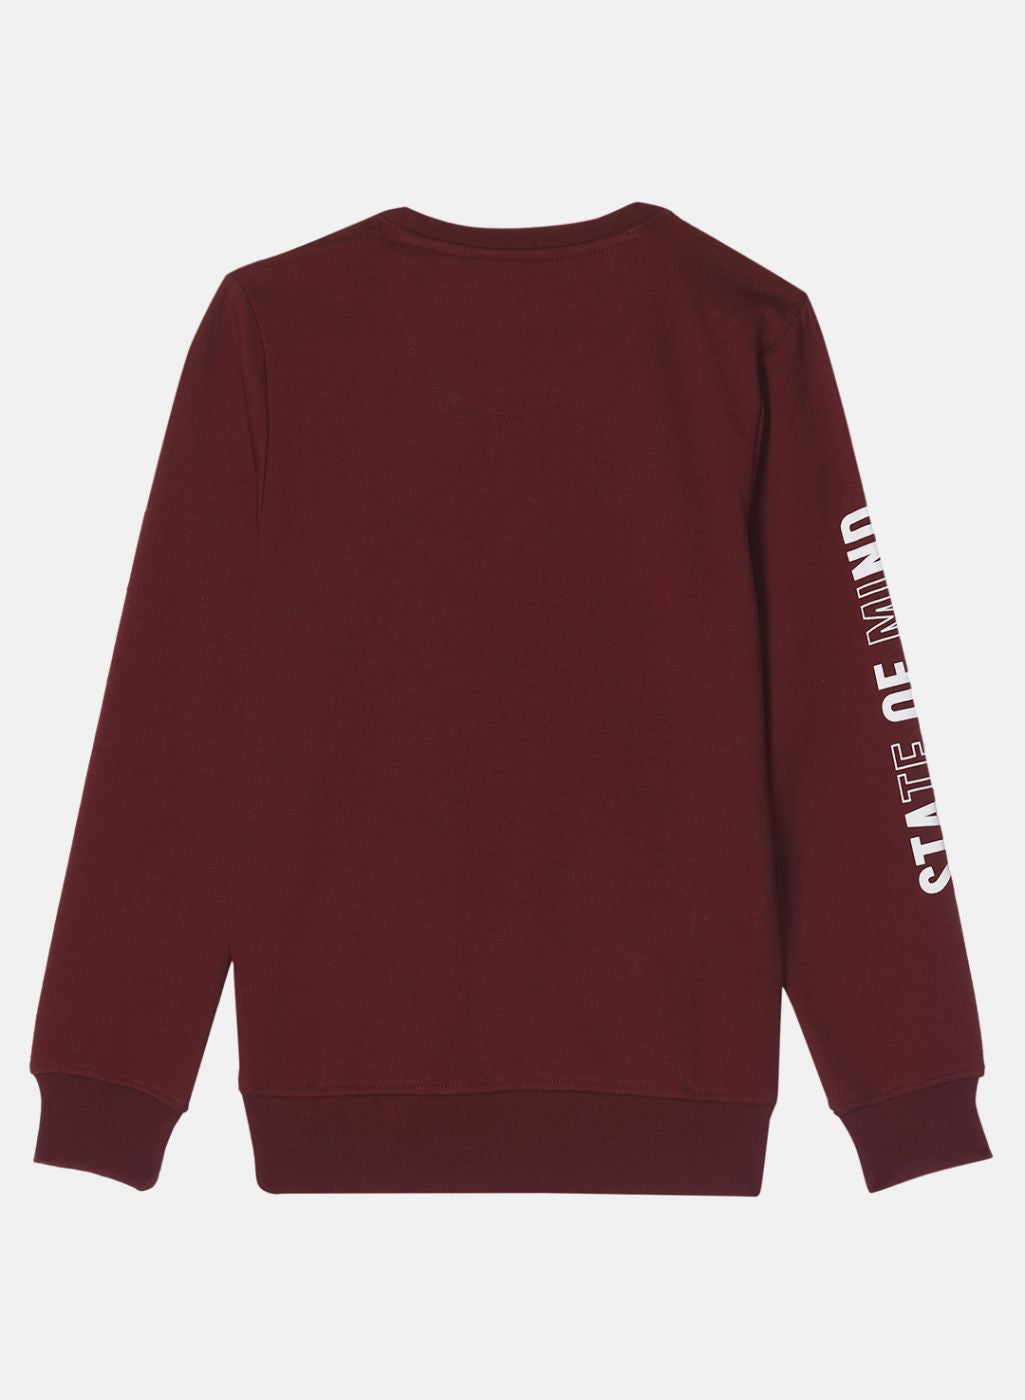 Boys Maroon Printed Sweatshirt